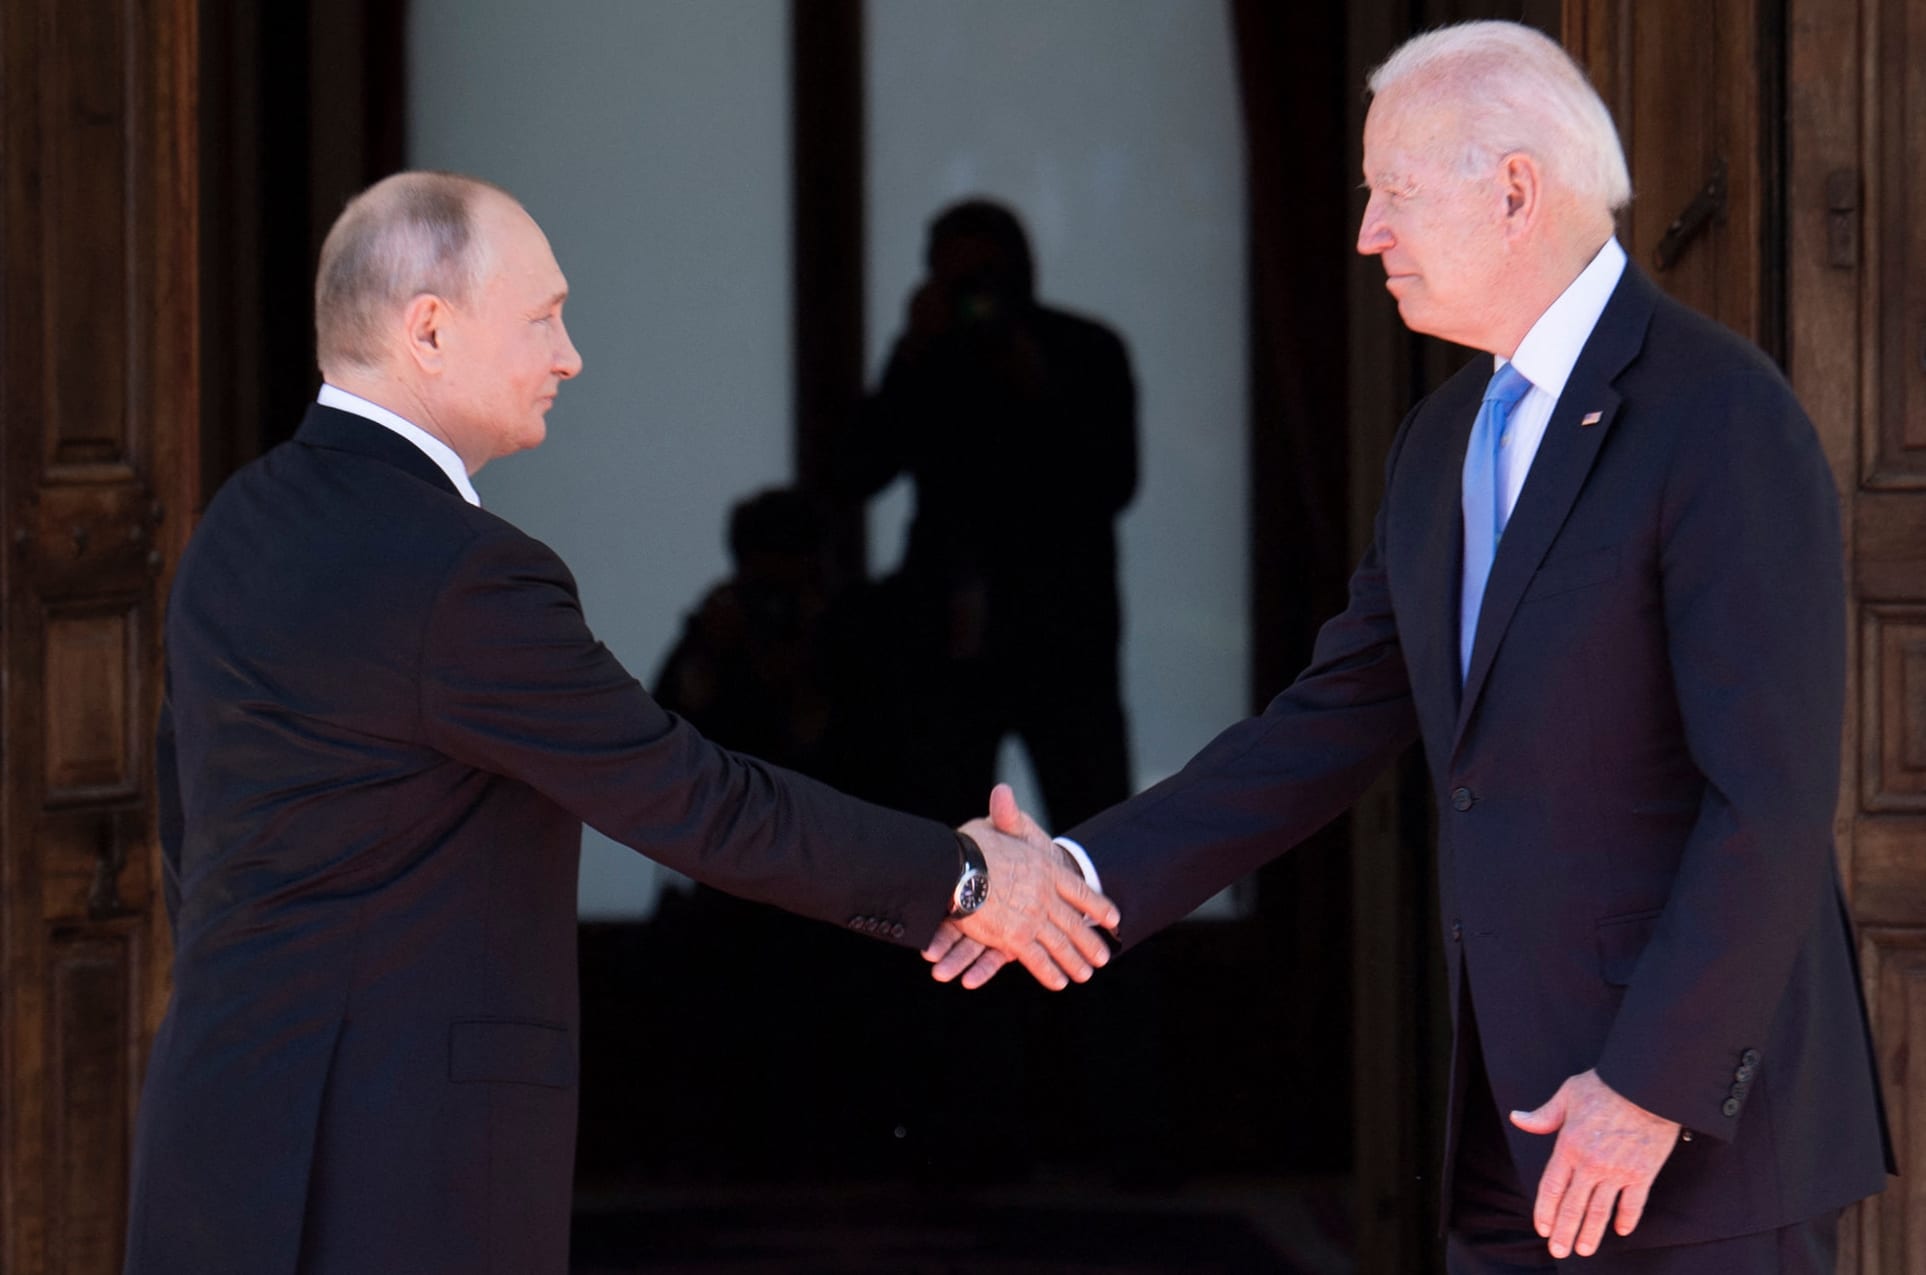 Russian President Vladimir Putin shakes hands with US President Joe Biden prior to the US-Russia summit in Geneva on 16 June 2021.